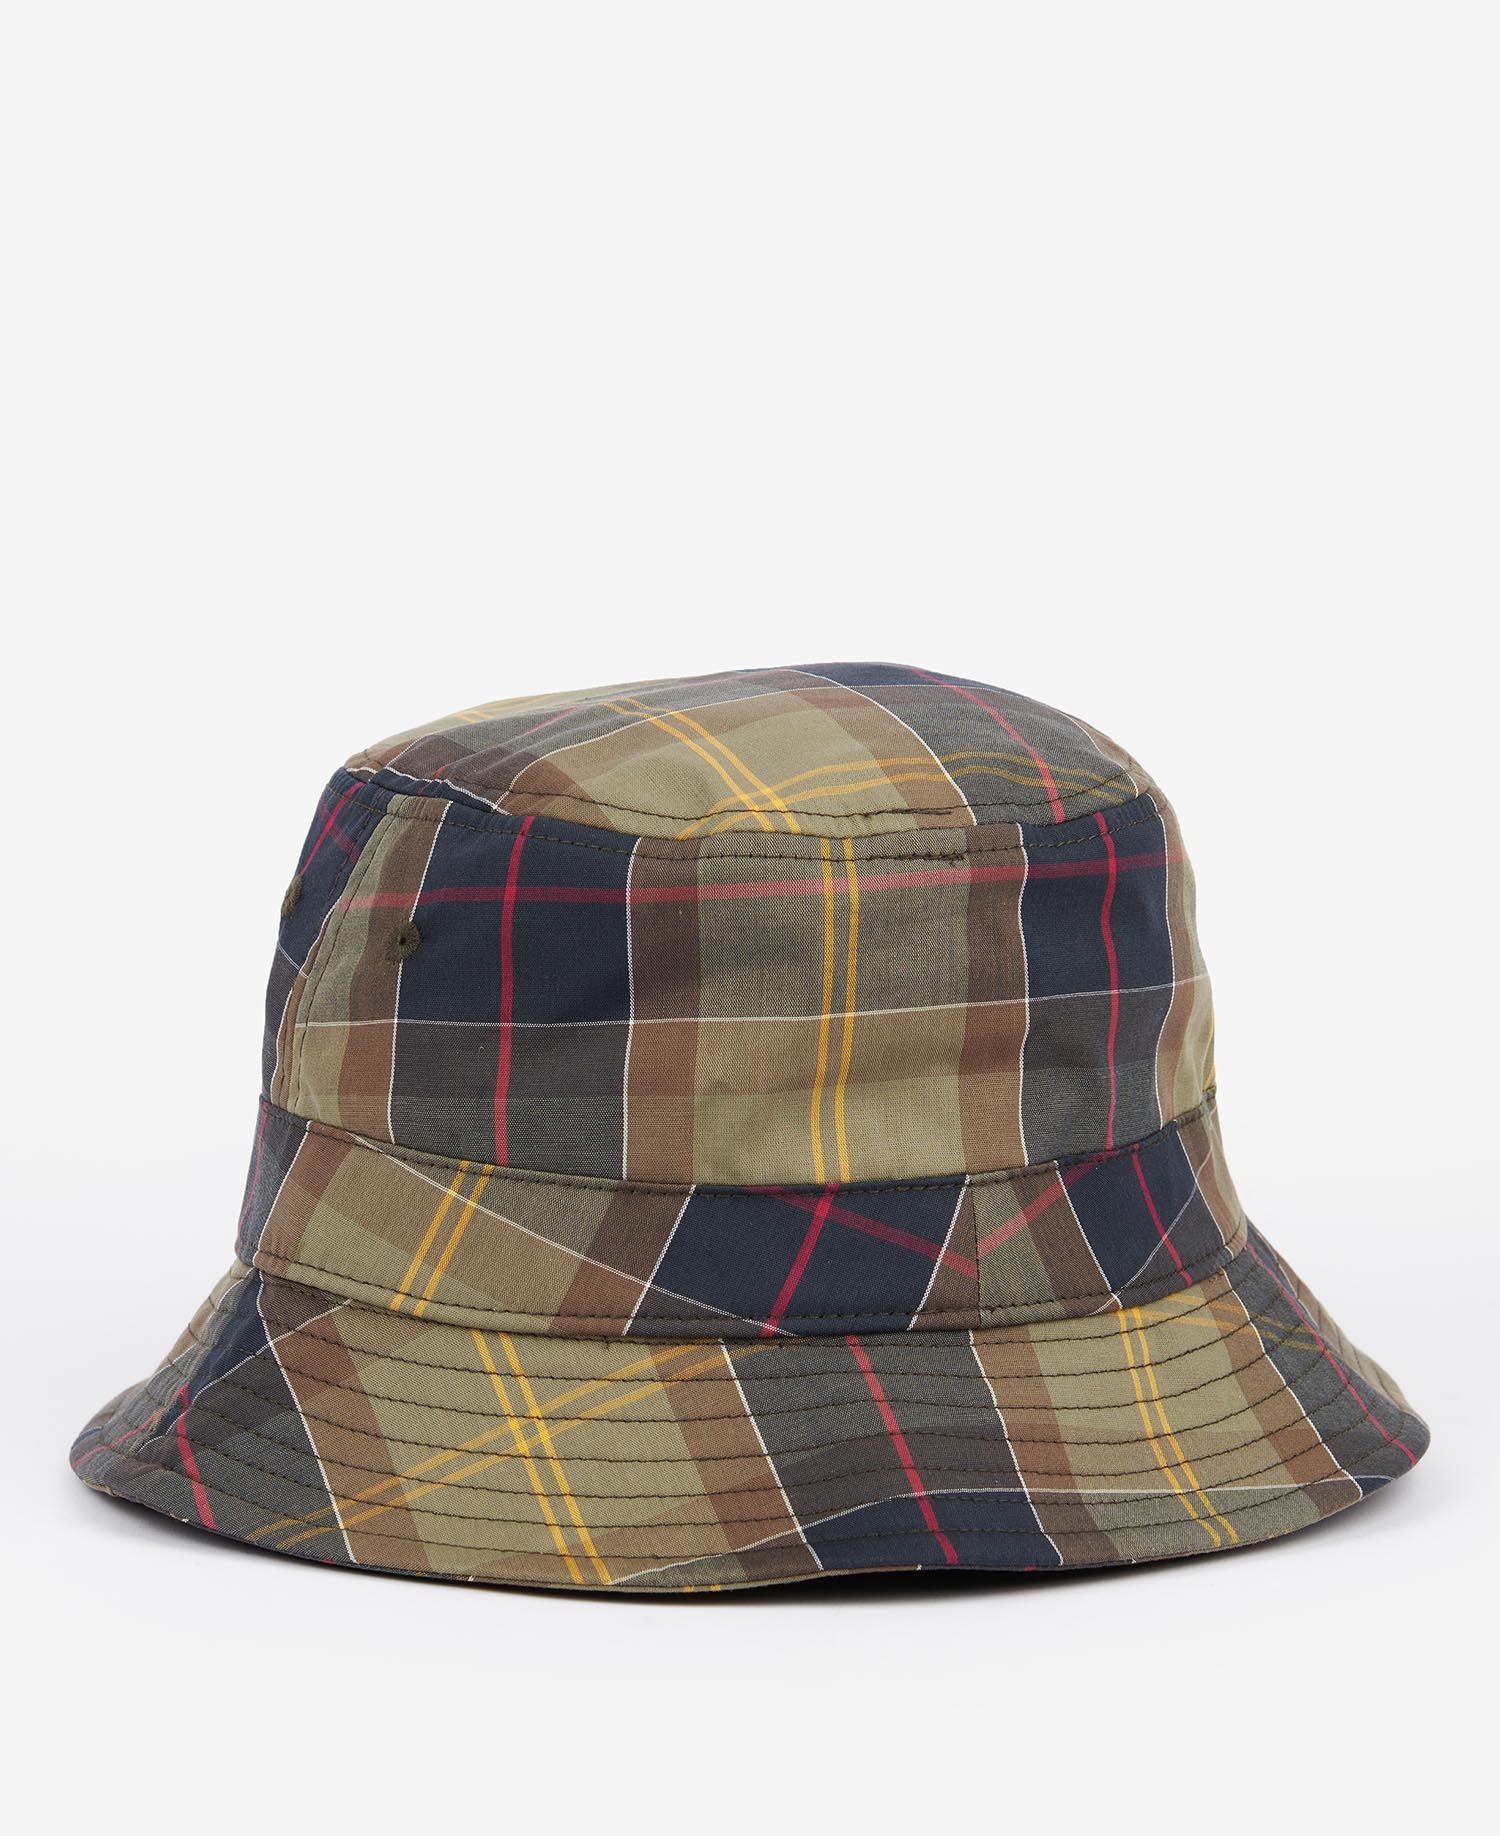 Barbour Tartan Bucket Hat - Classic Tartan